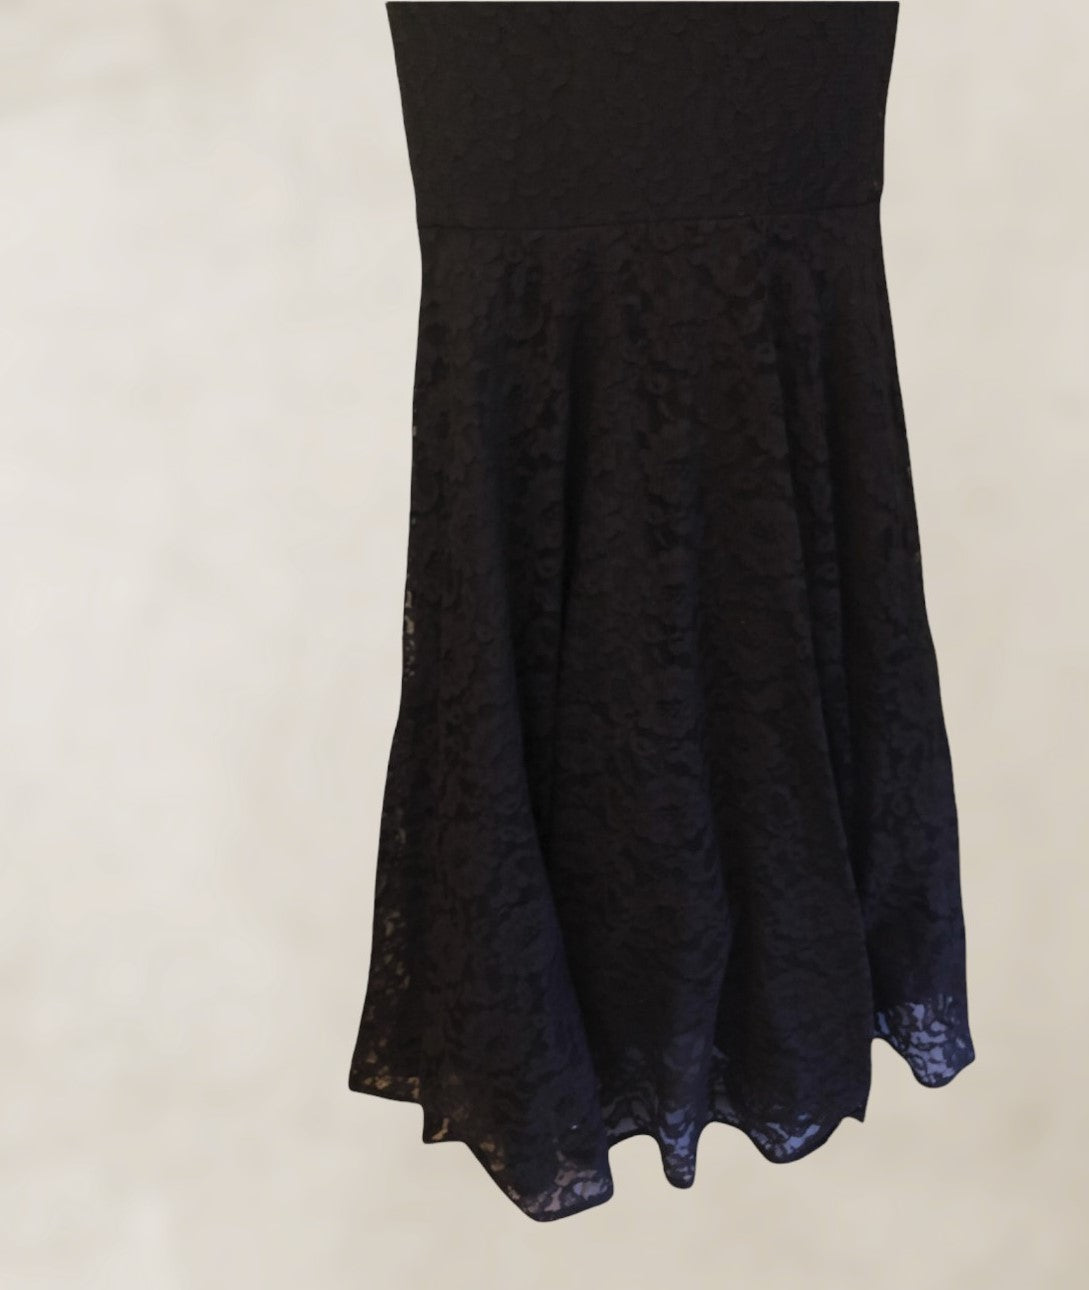 Lipsy Black Lace Fishtail Maxi Dress, Prom, Mermaid UK 8 US 4 EU 36 BNWT RRP£150 Timeless Fashions